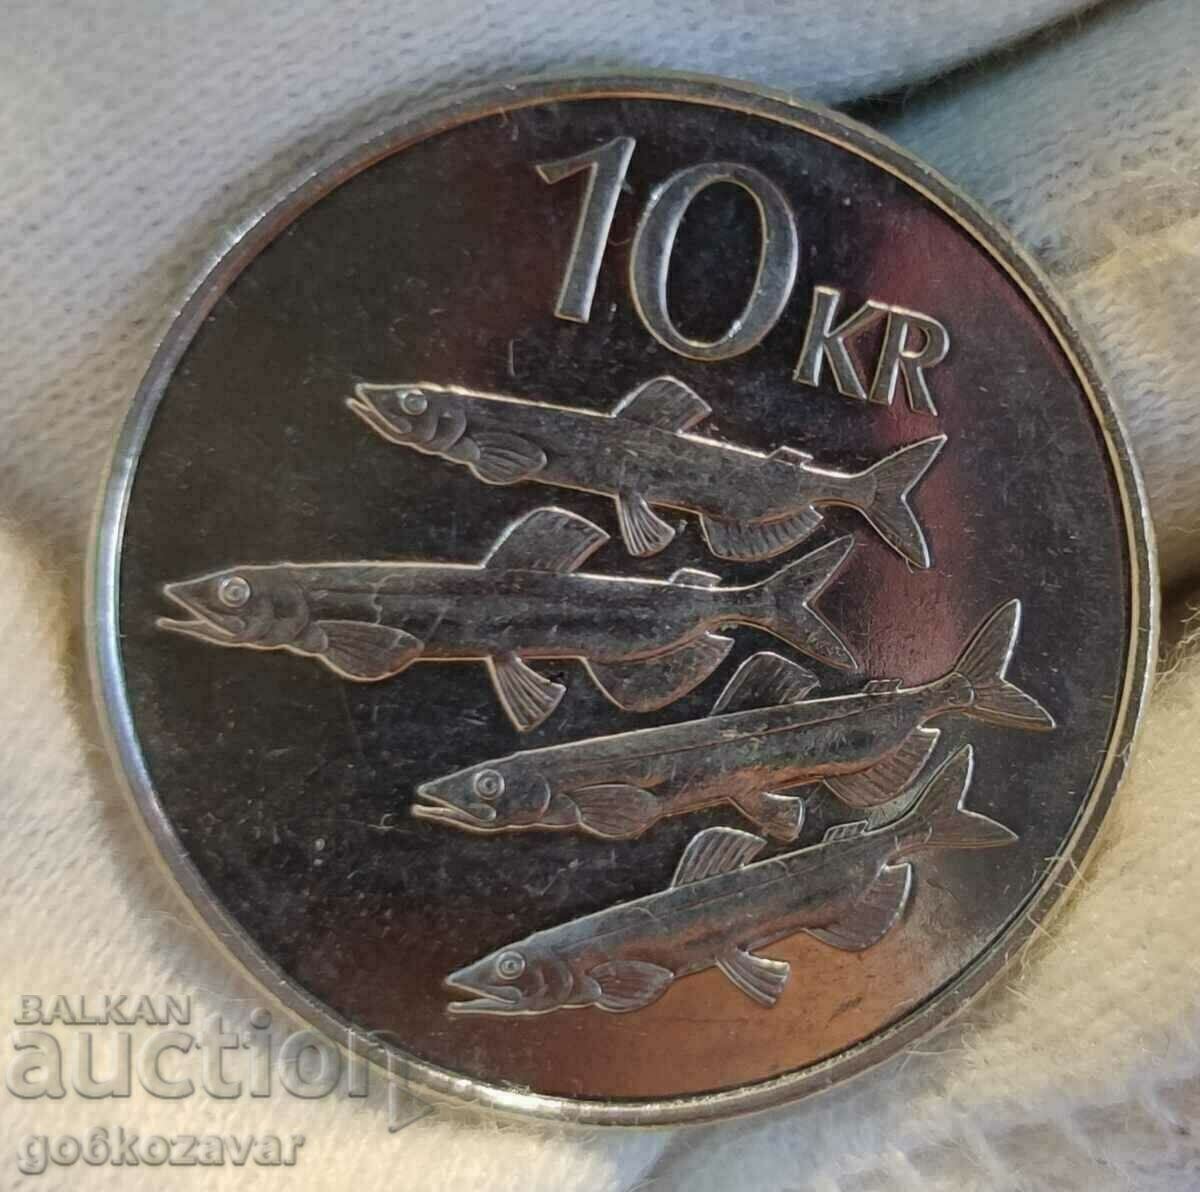 Iceland 10 kroner 2008